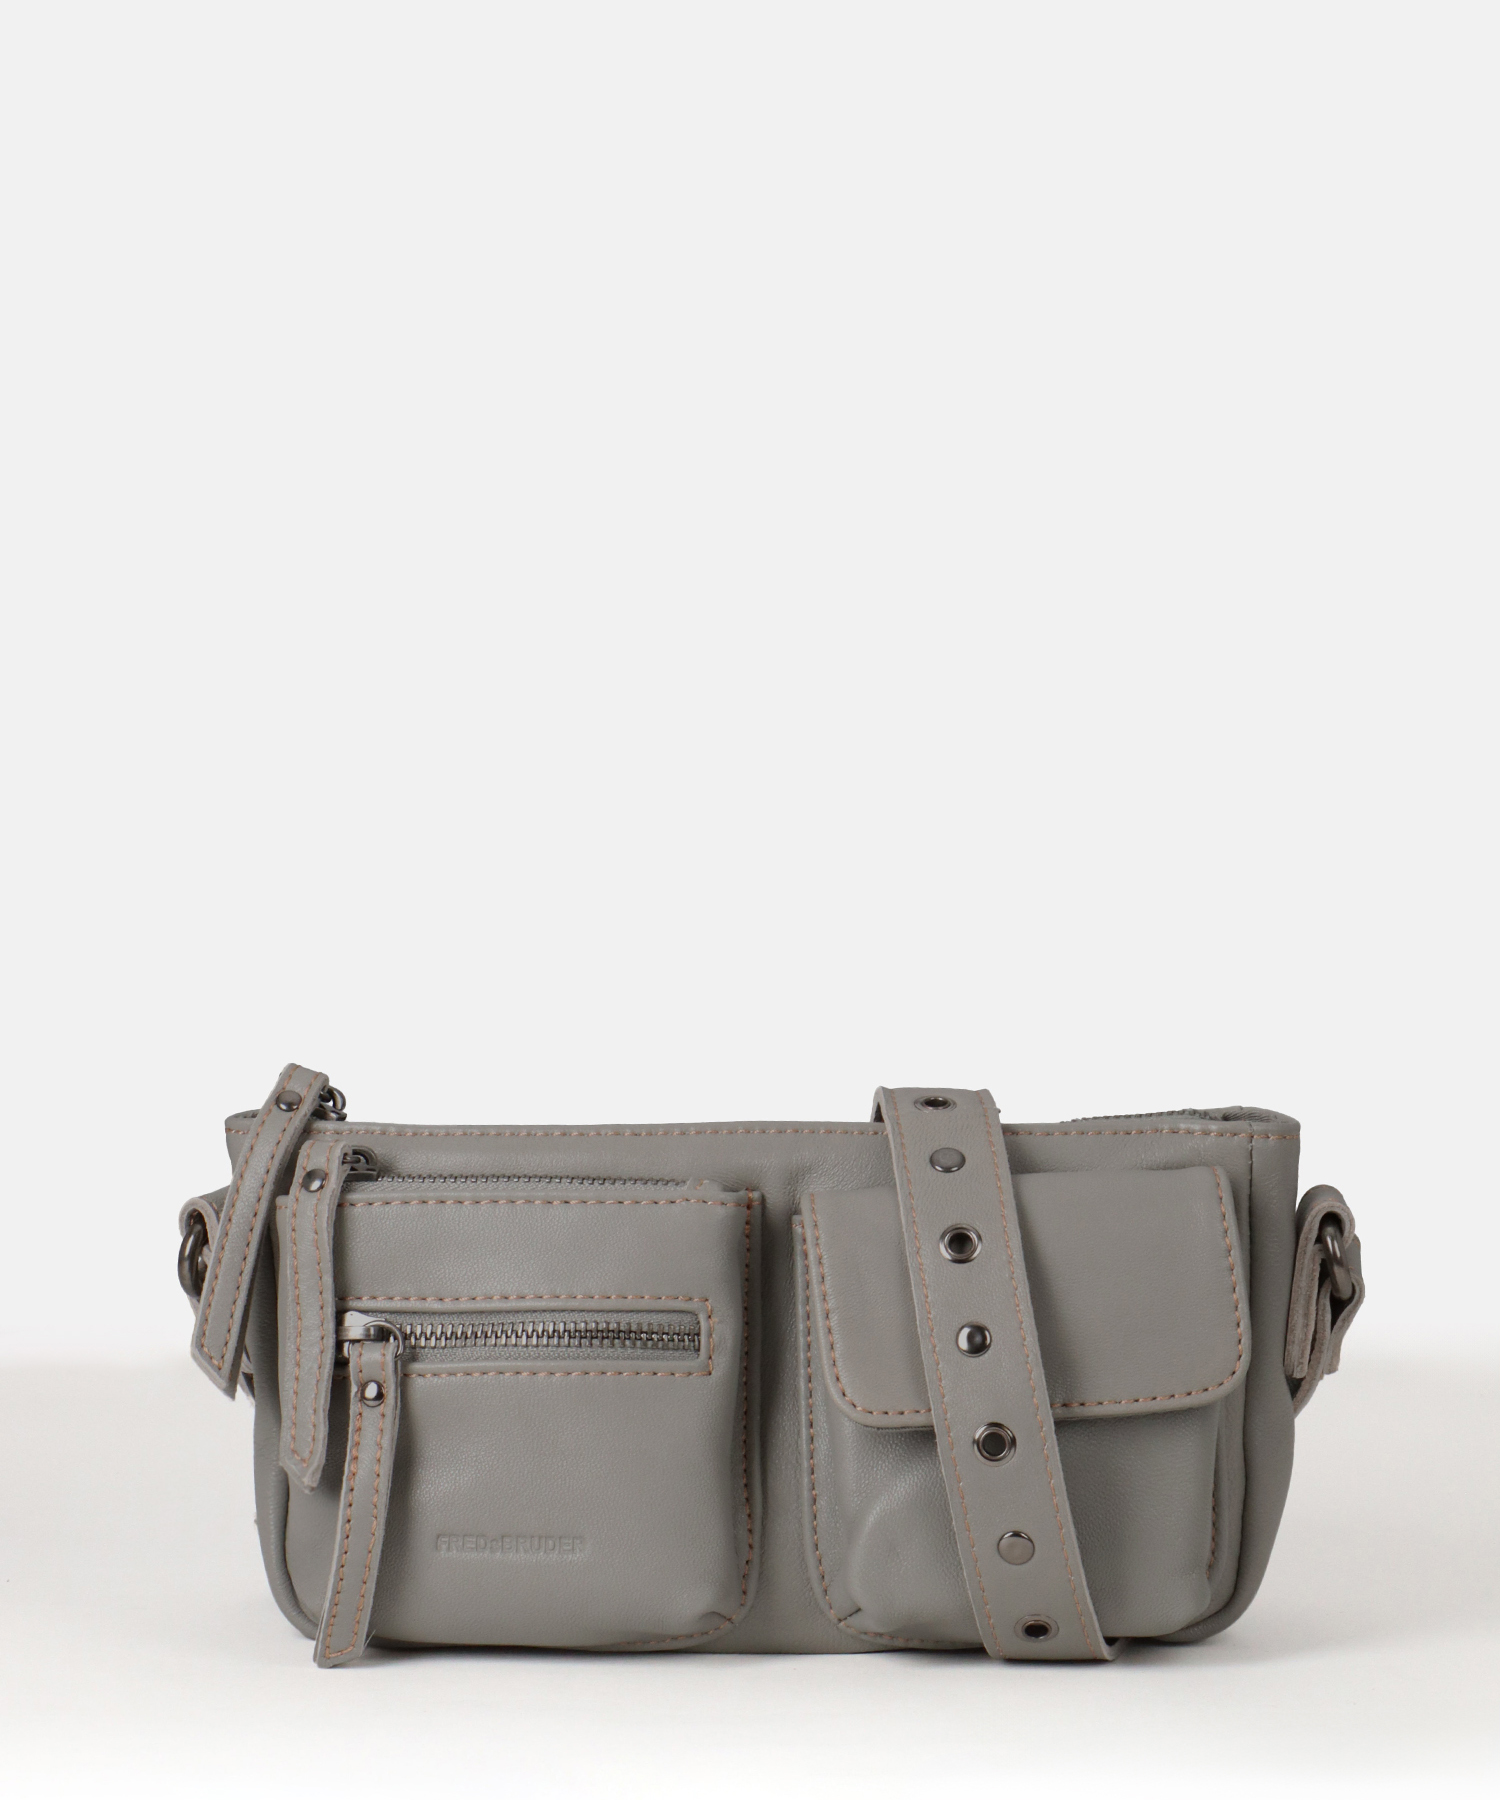 FREDsBRUDER Tasche In My Pocket Crossbag S Cool Grey OS